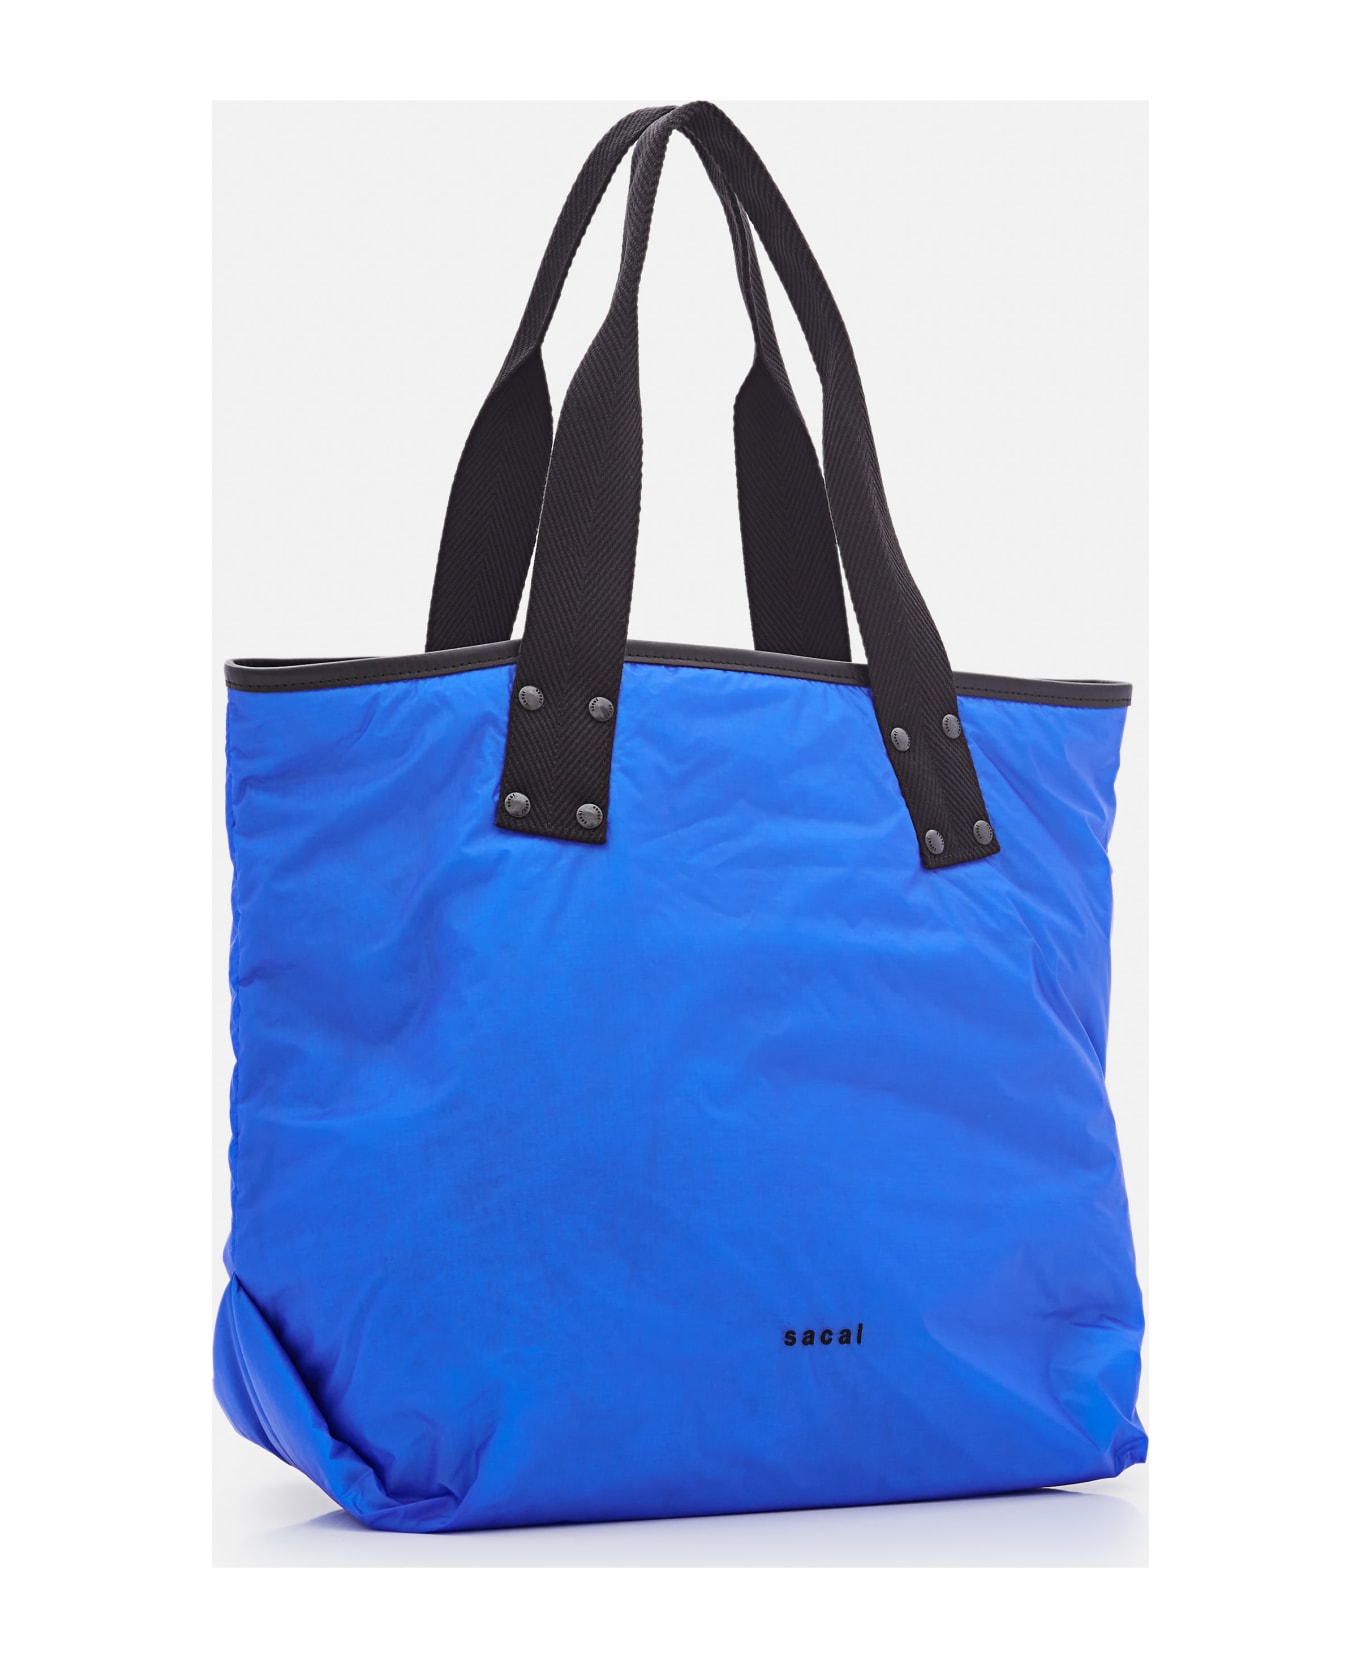 Sacai Skytex Tote Large Bag - Blue トートバッグ